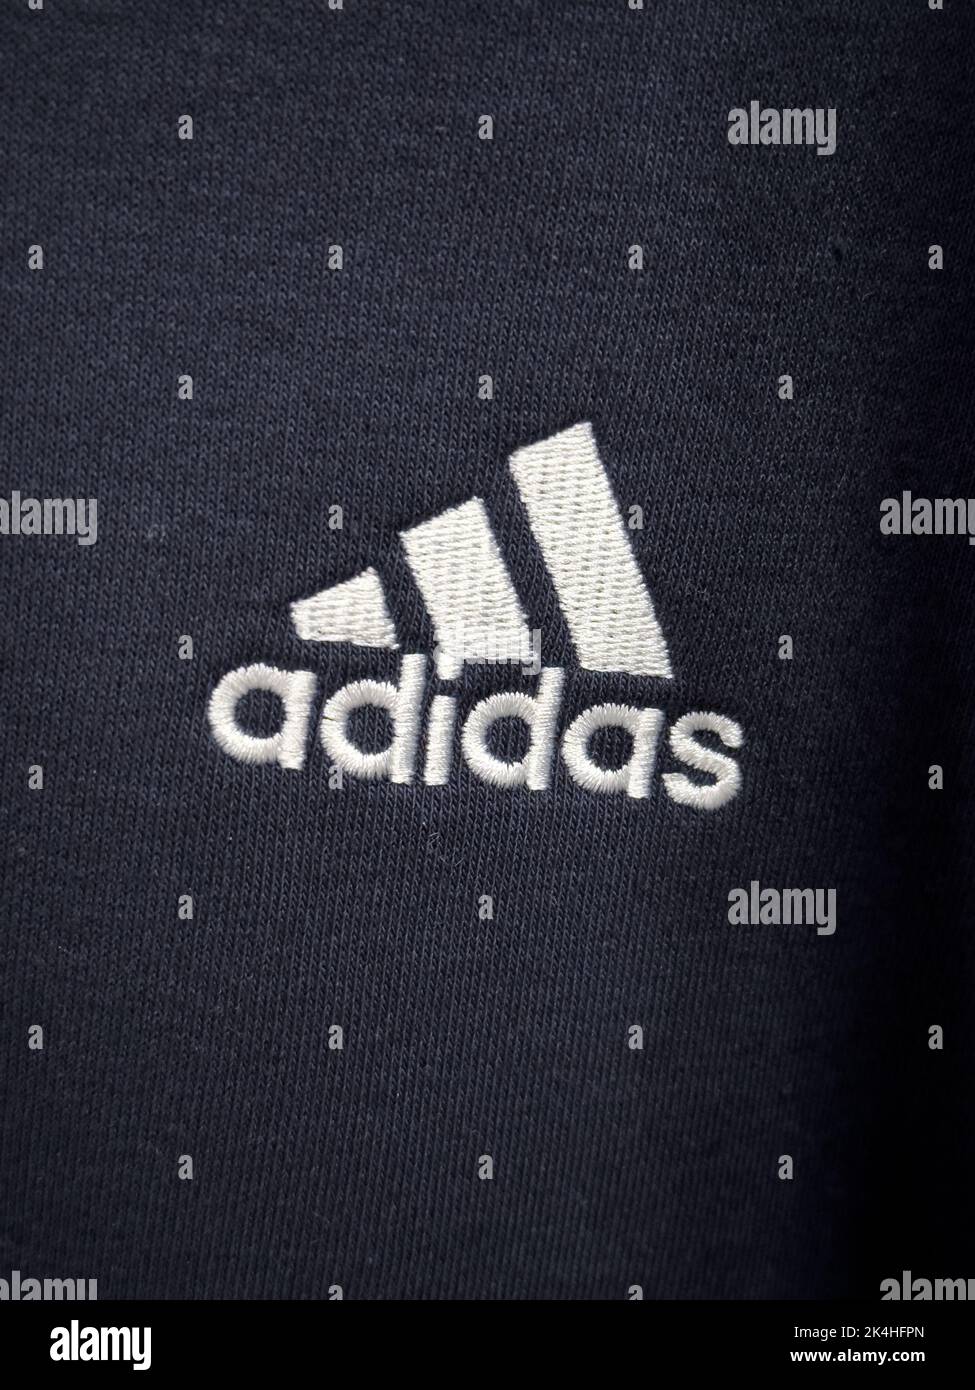 Adidas Original Label auf dunklem Stoff Stockfoto